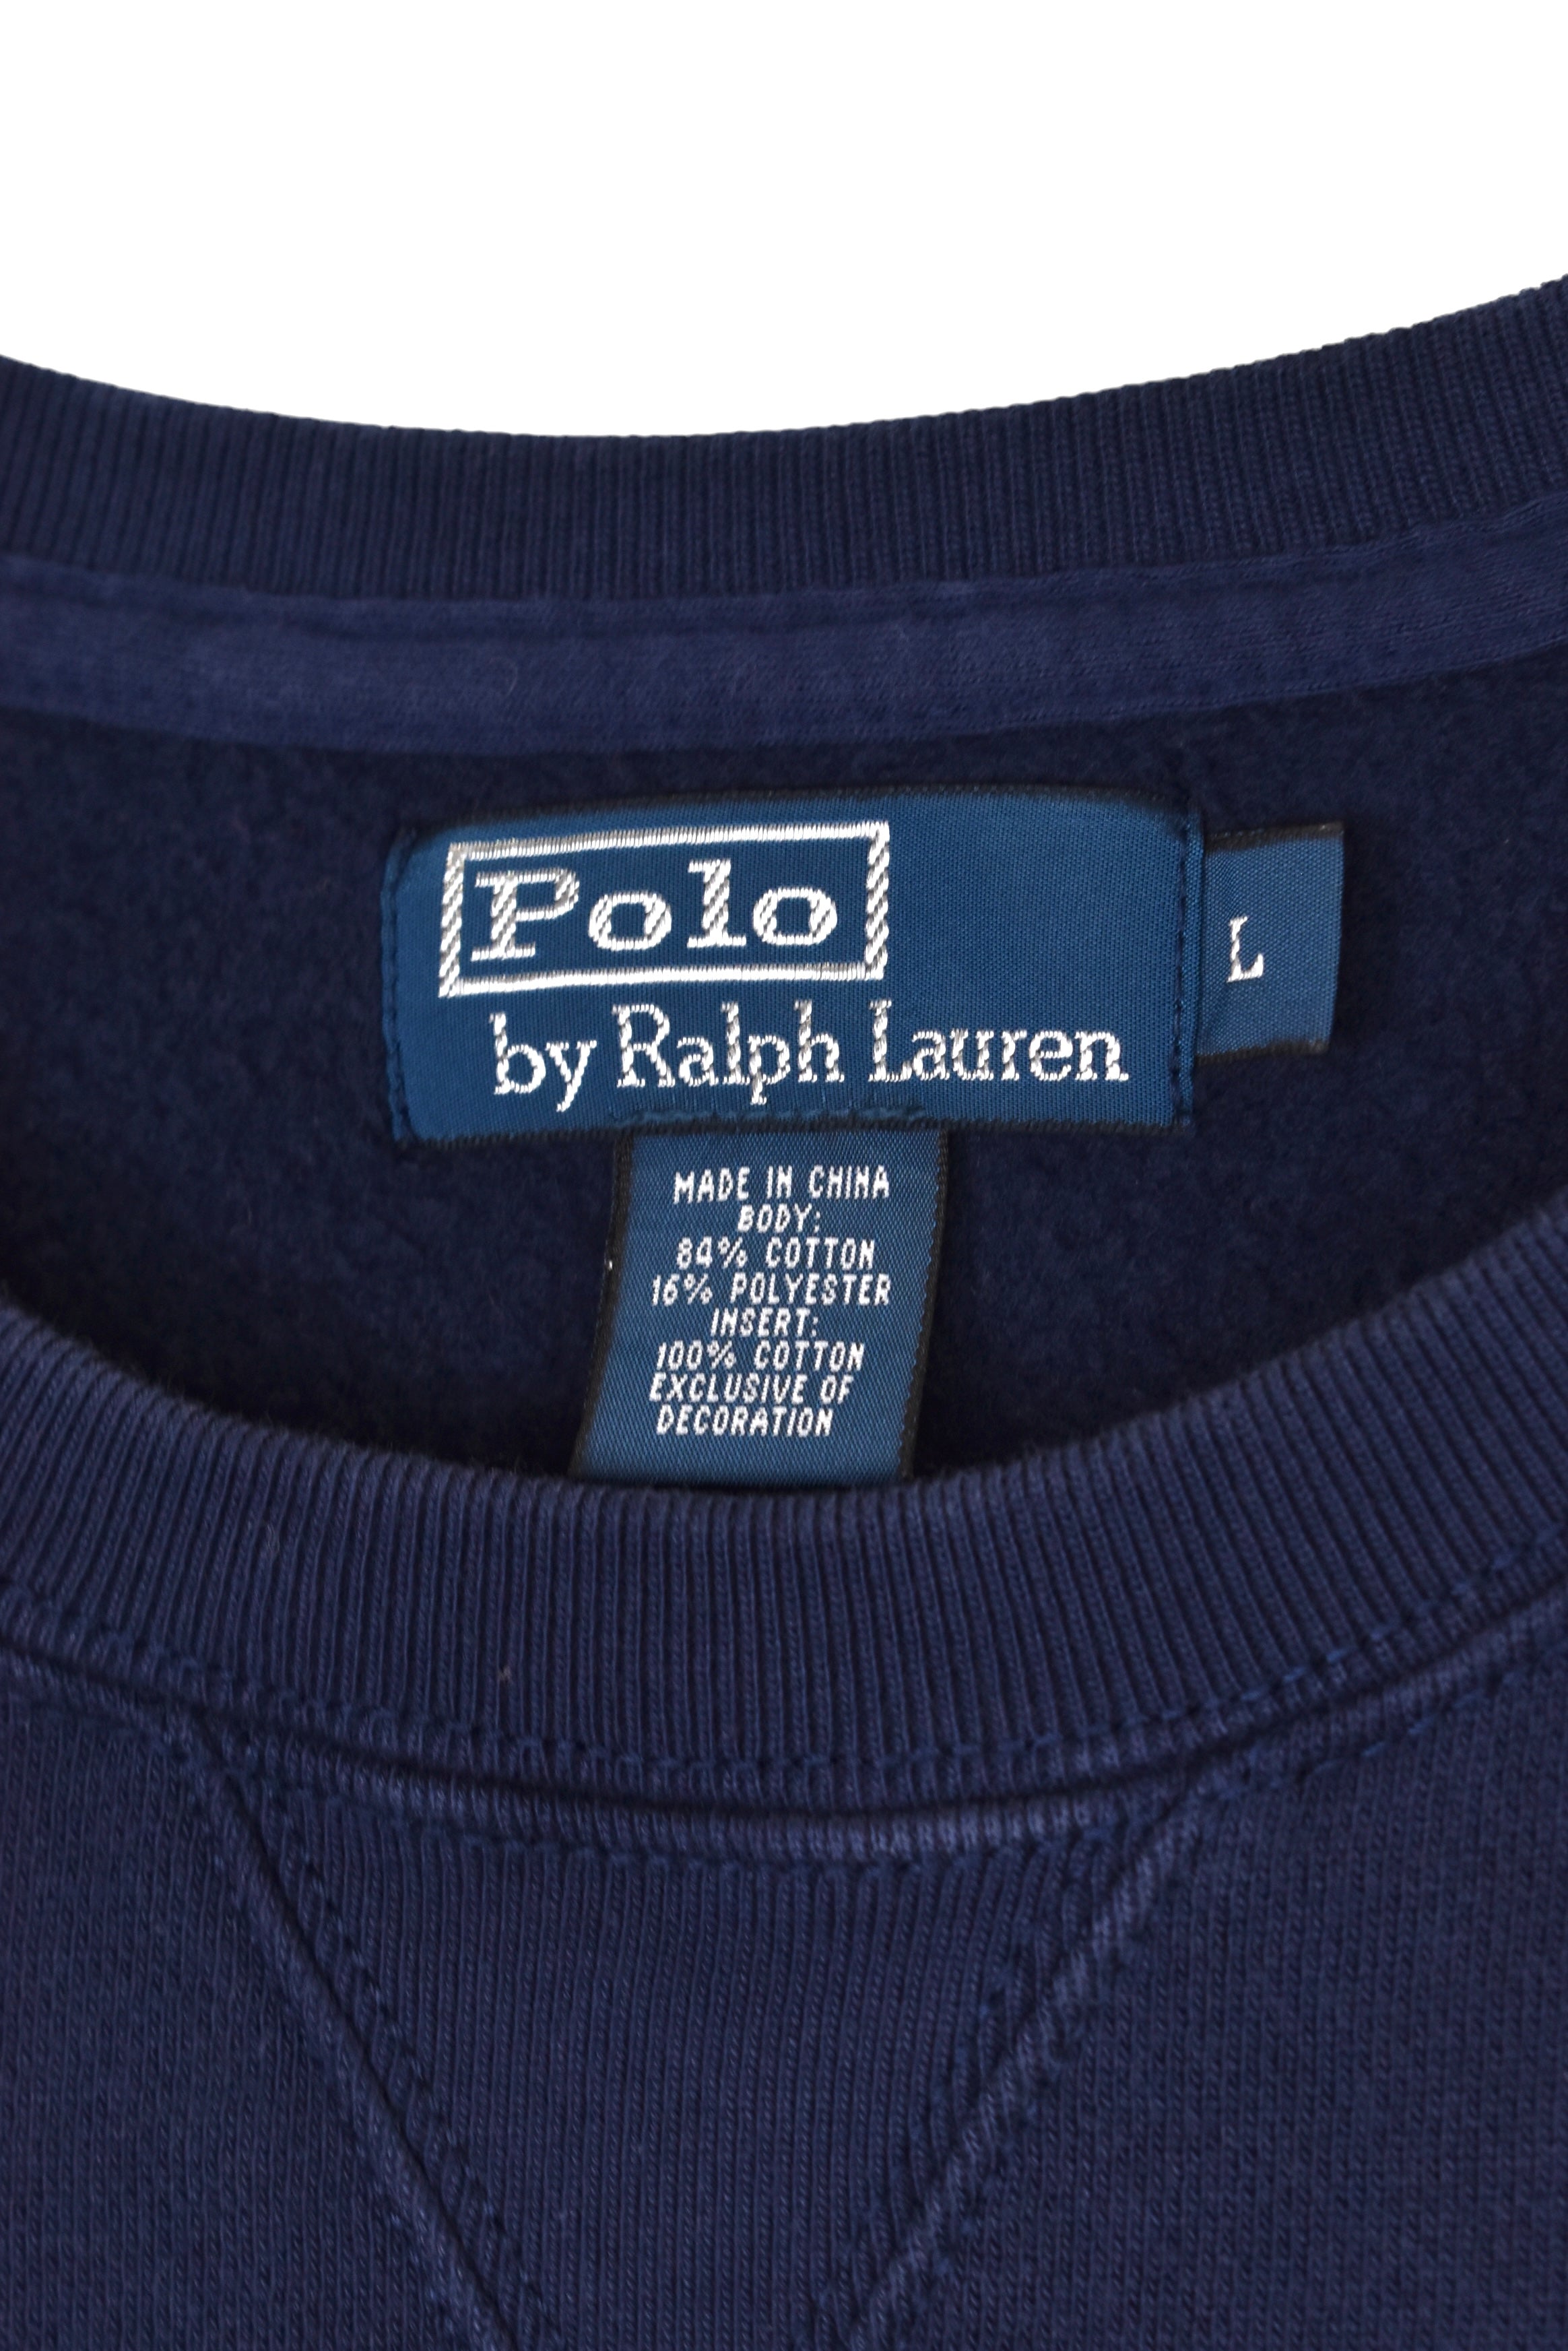 Vintage Ralph Lauren sweatshirt, navy embroidered crewneck - Large